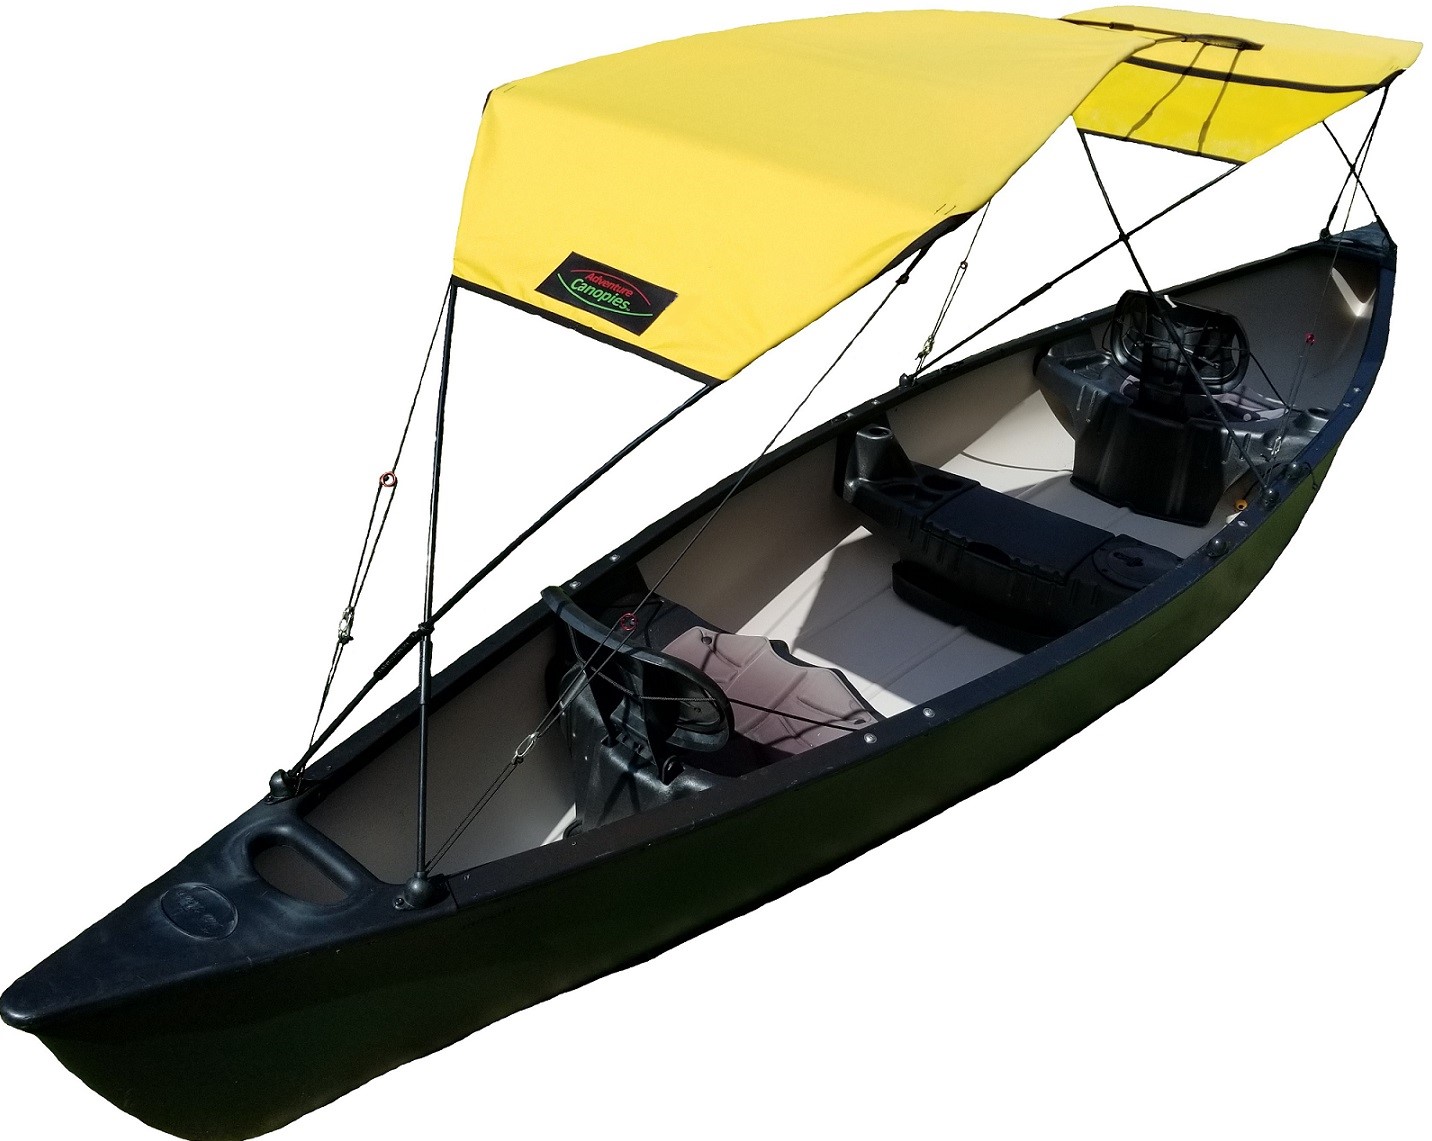 https://adventurecanopies.com/wp-content/uploads/2020/02/Canoe-Tandem-Adventure-Canopies-sun-shade.jpg